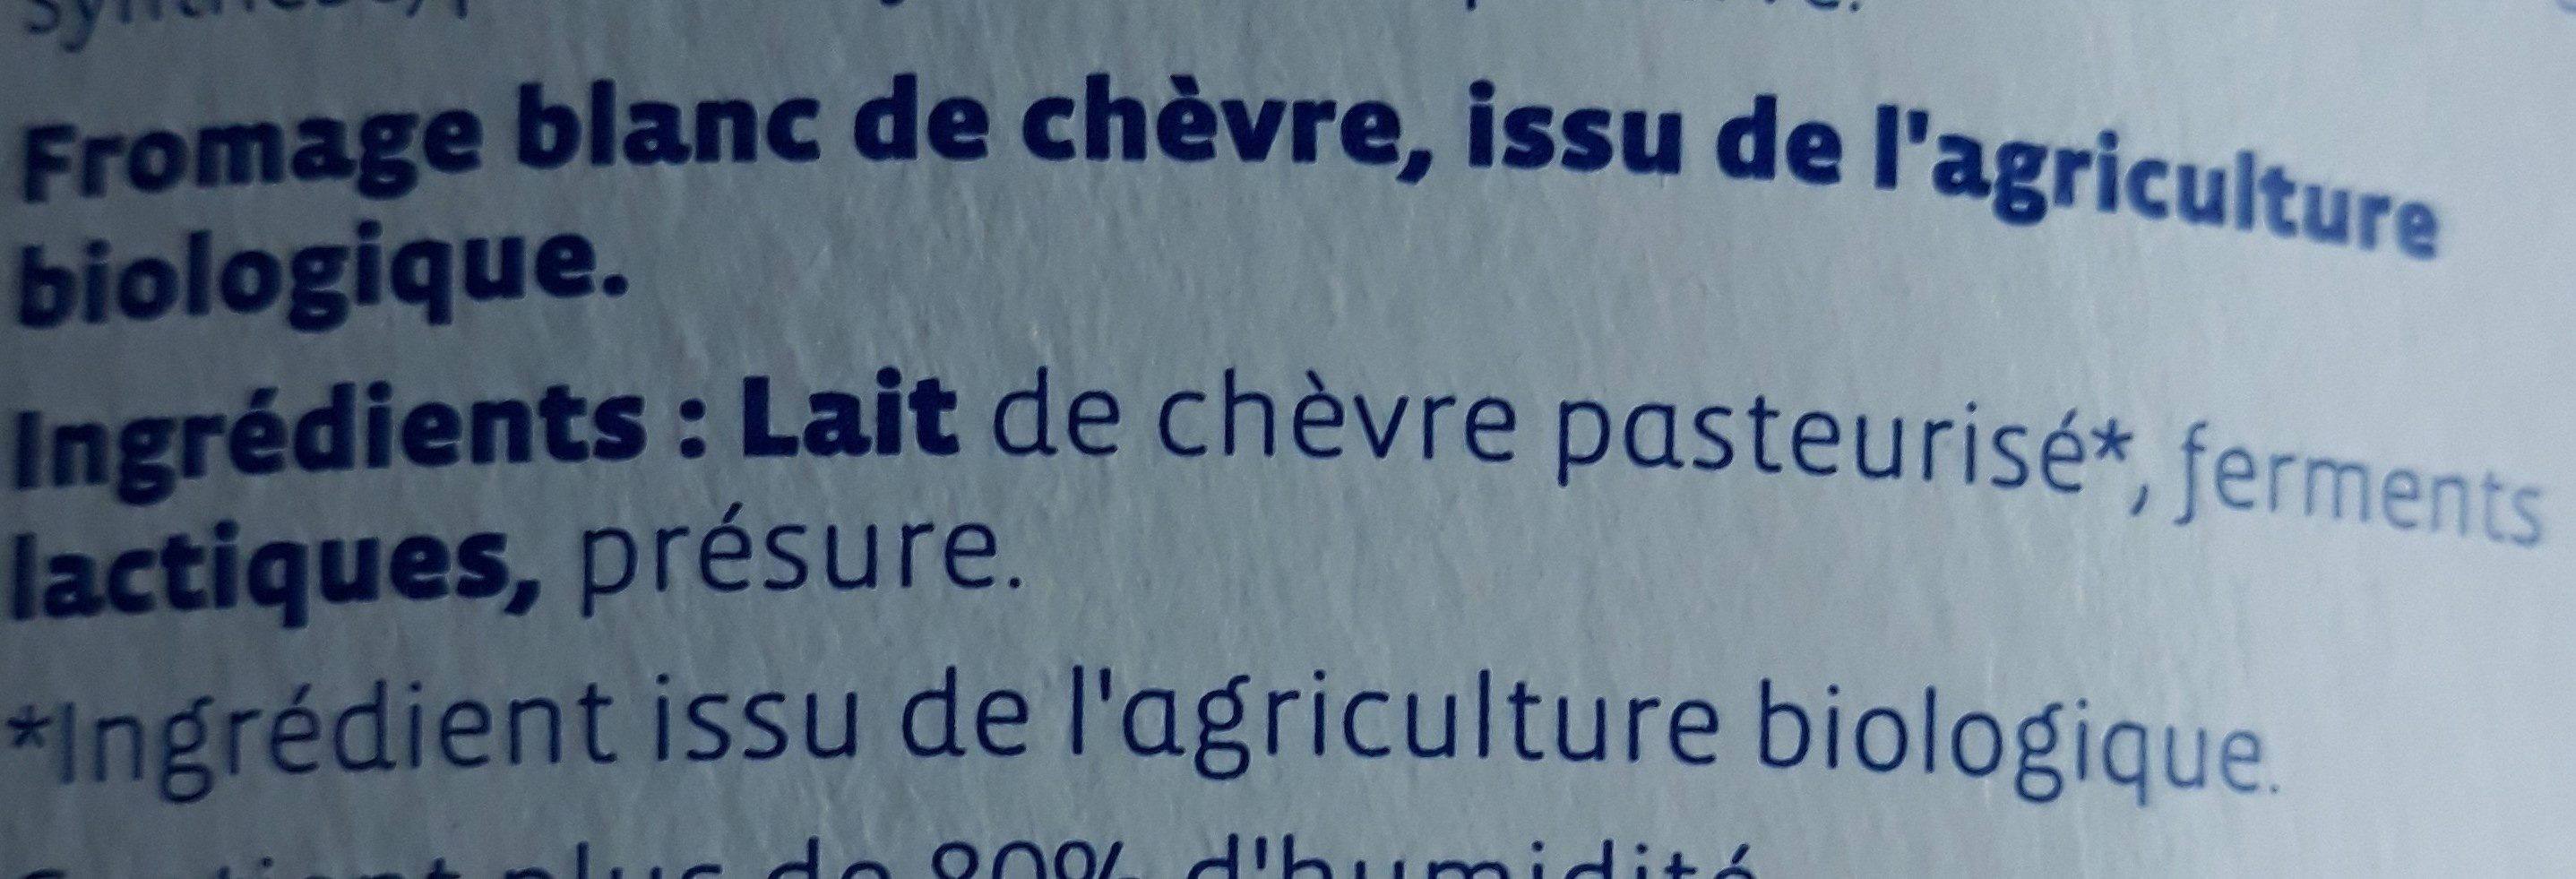 Fromage blanc de chèvre - Ingredients - fr